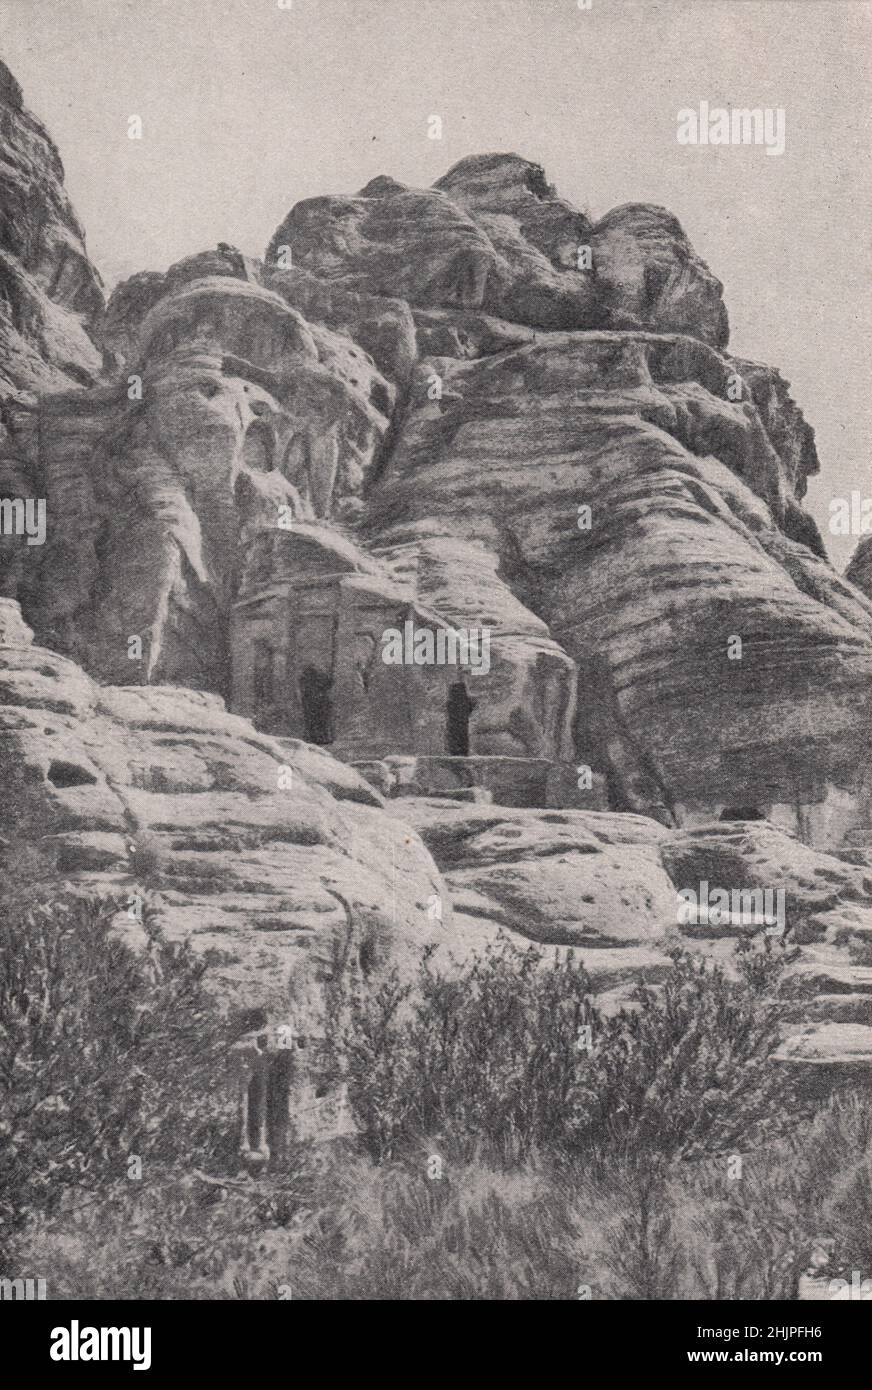 Tumbas romanas cortadas en piedra arenisca erosionadas por siglos. Arabia (1923) Foto de stock